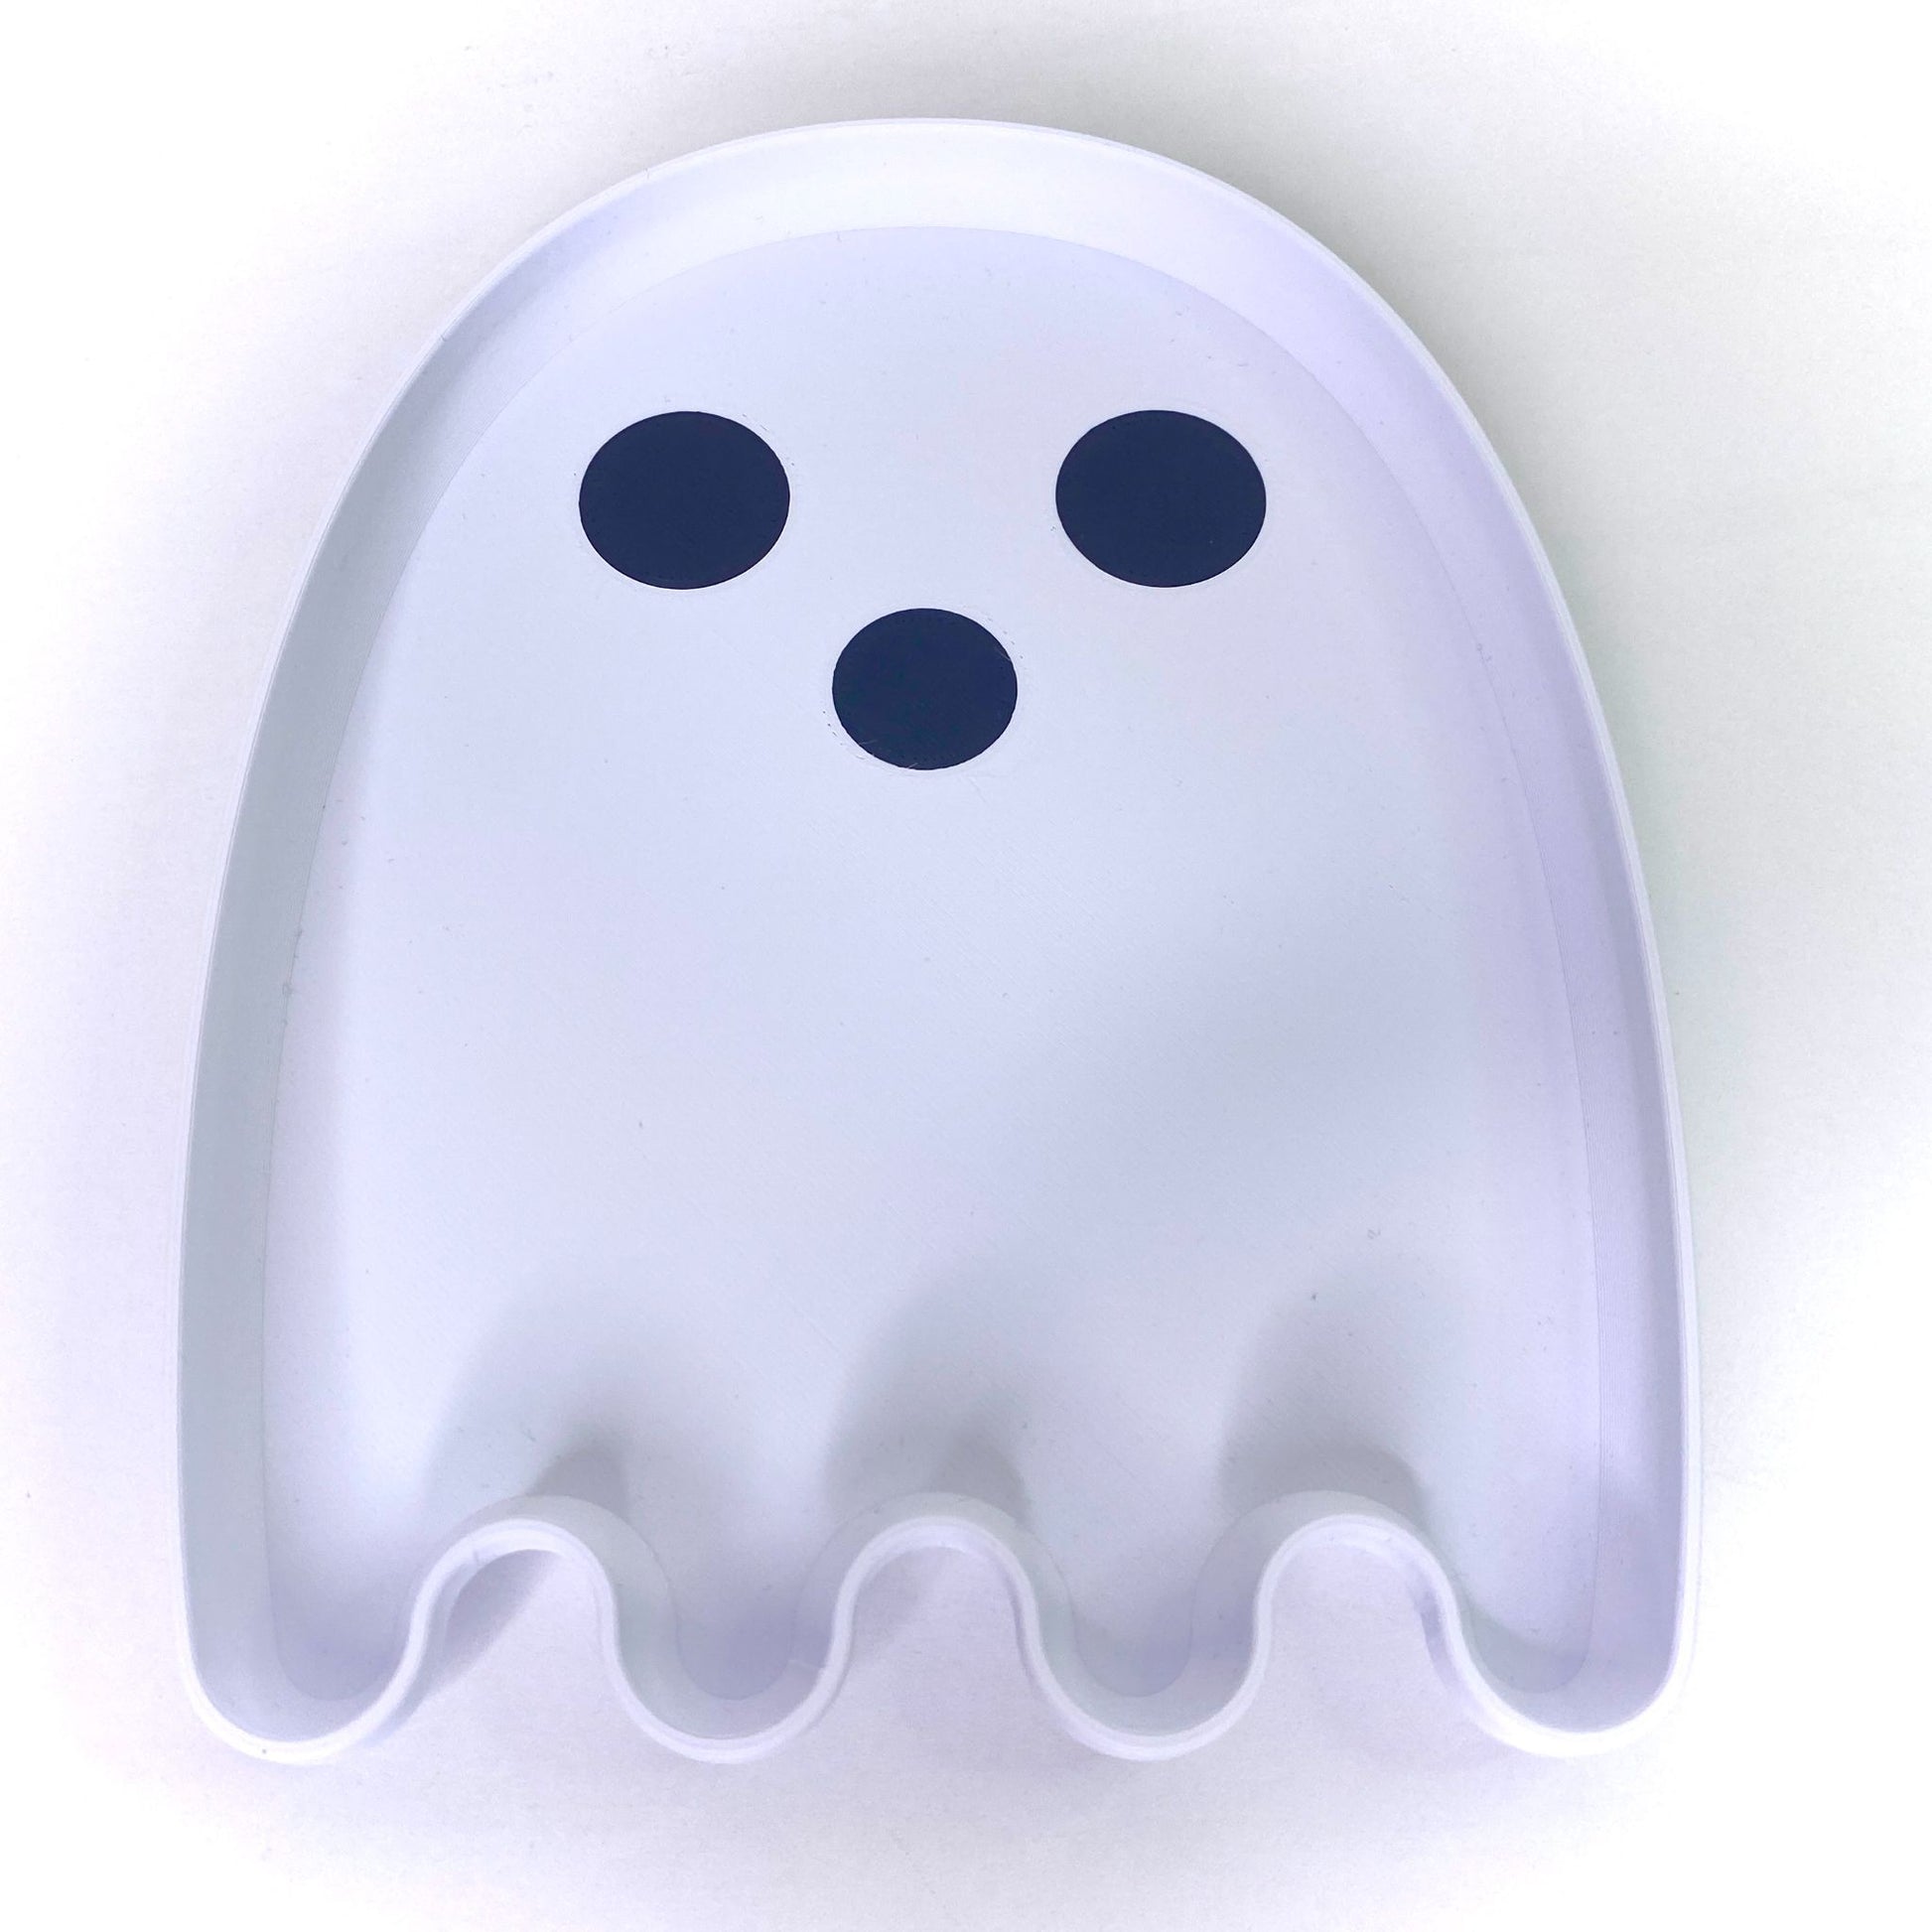 070-103 - Ghost Trinket Tray - 1